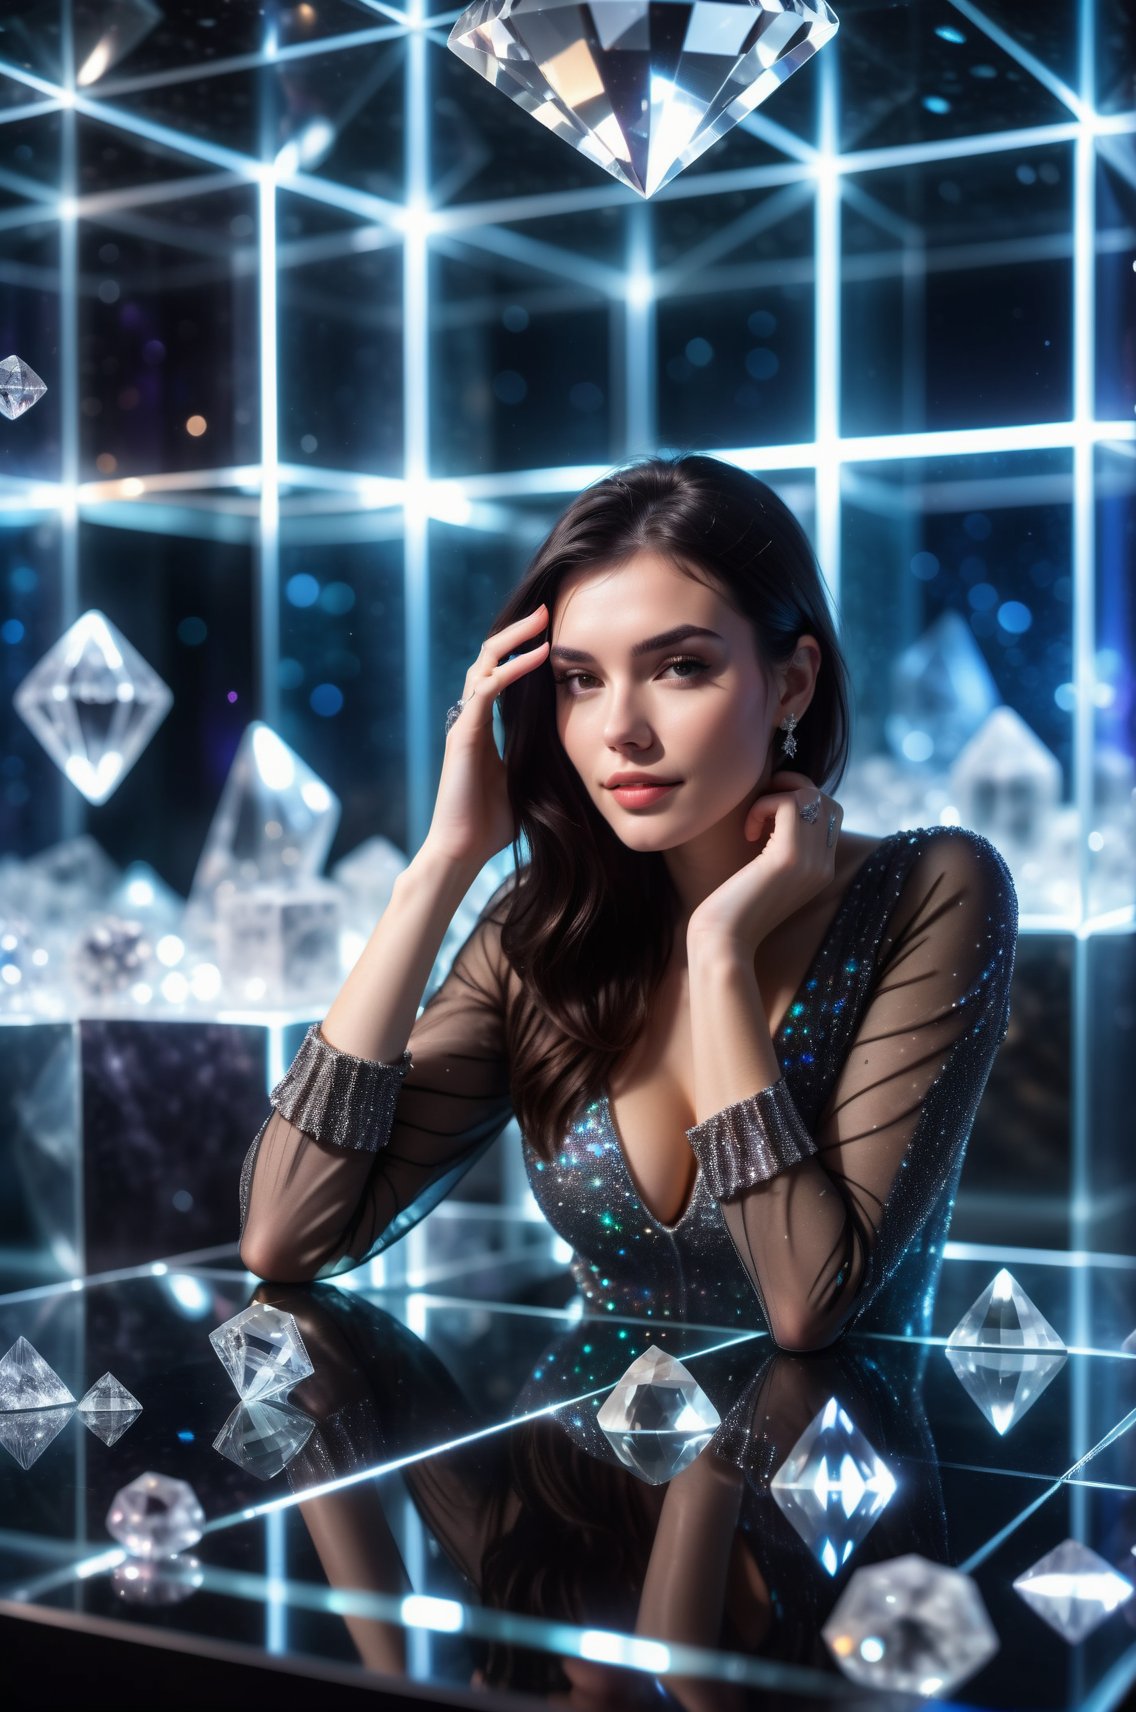 1girl European dark hair chilling in the crystal museum cube, diamond material, twinkle glow, depth of field, bokeh background,